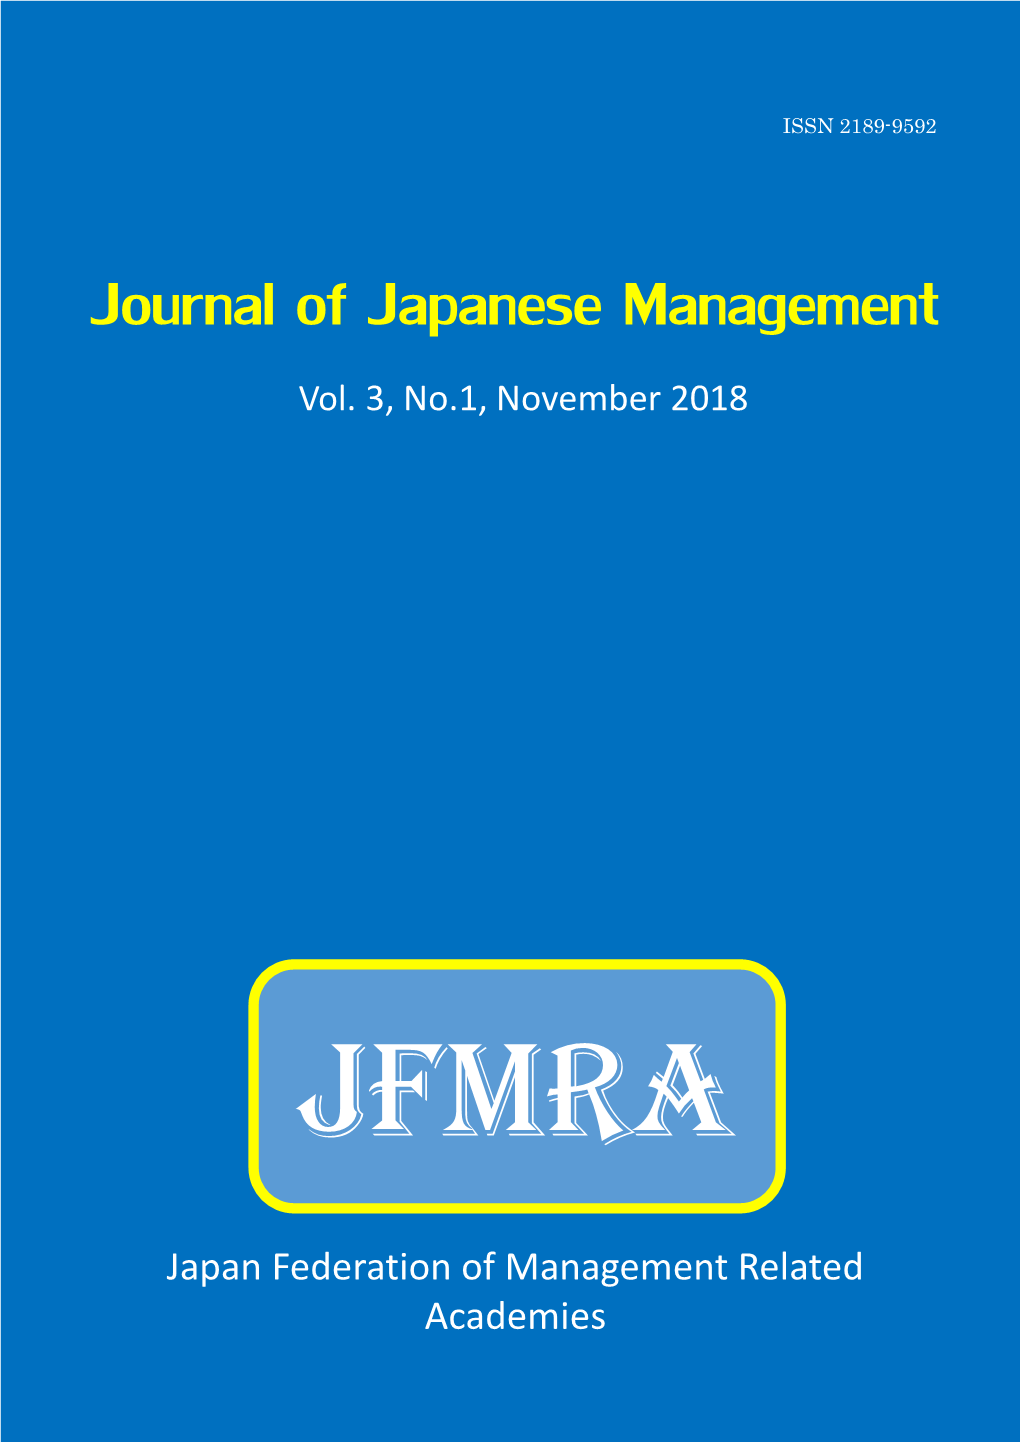 Journal of Japanese Management (JJM)